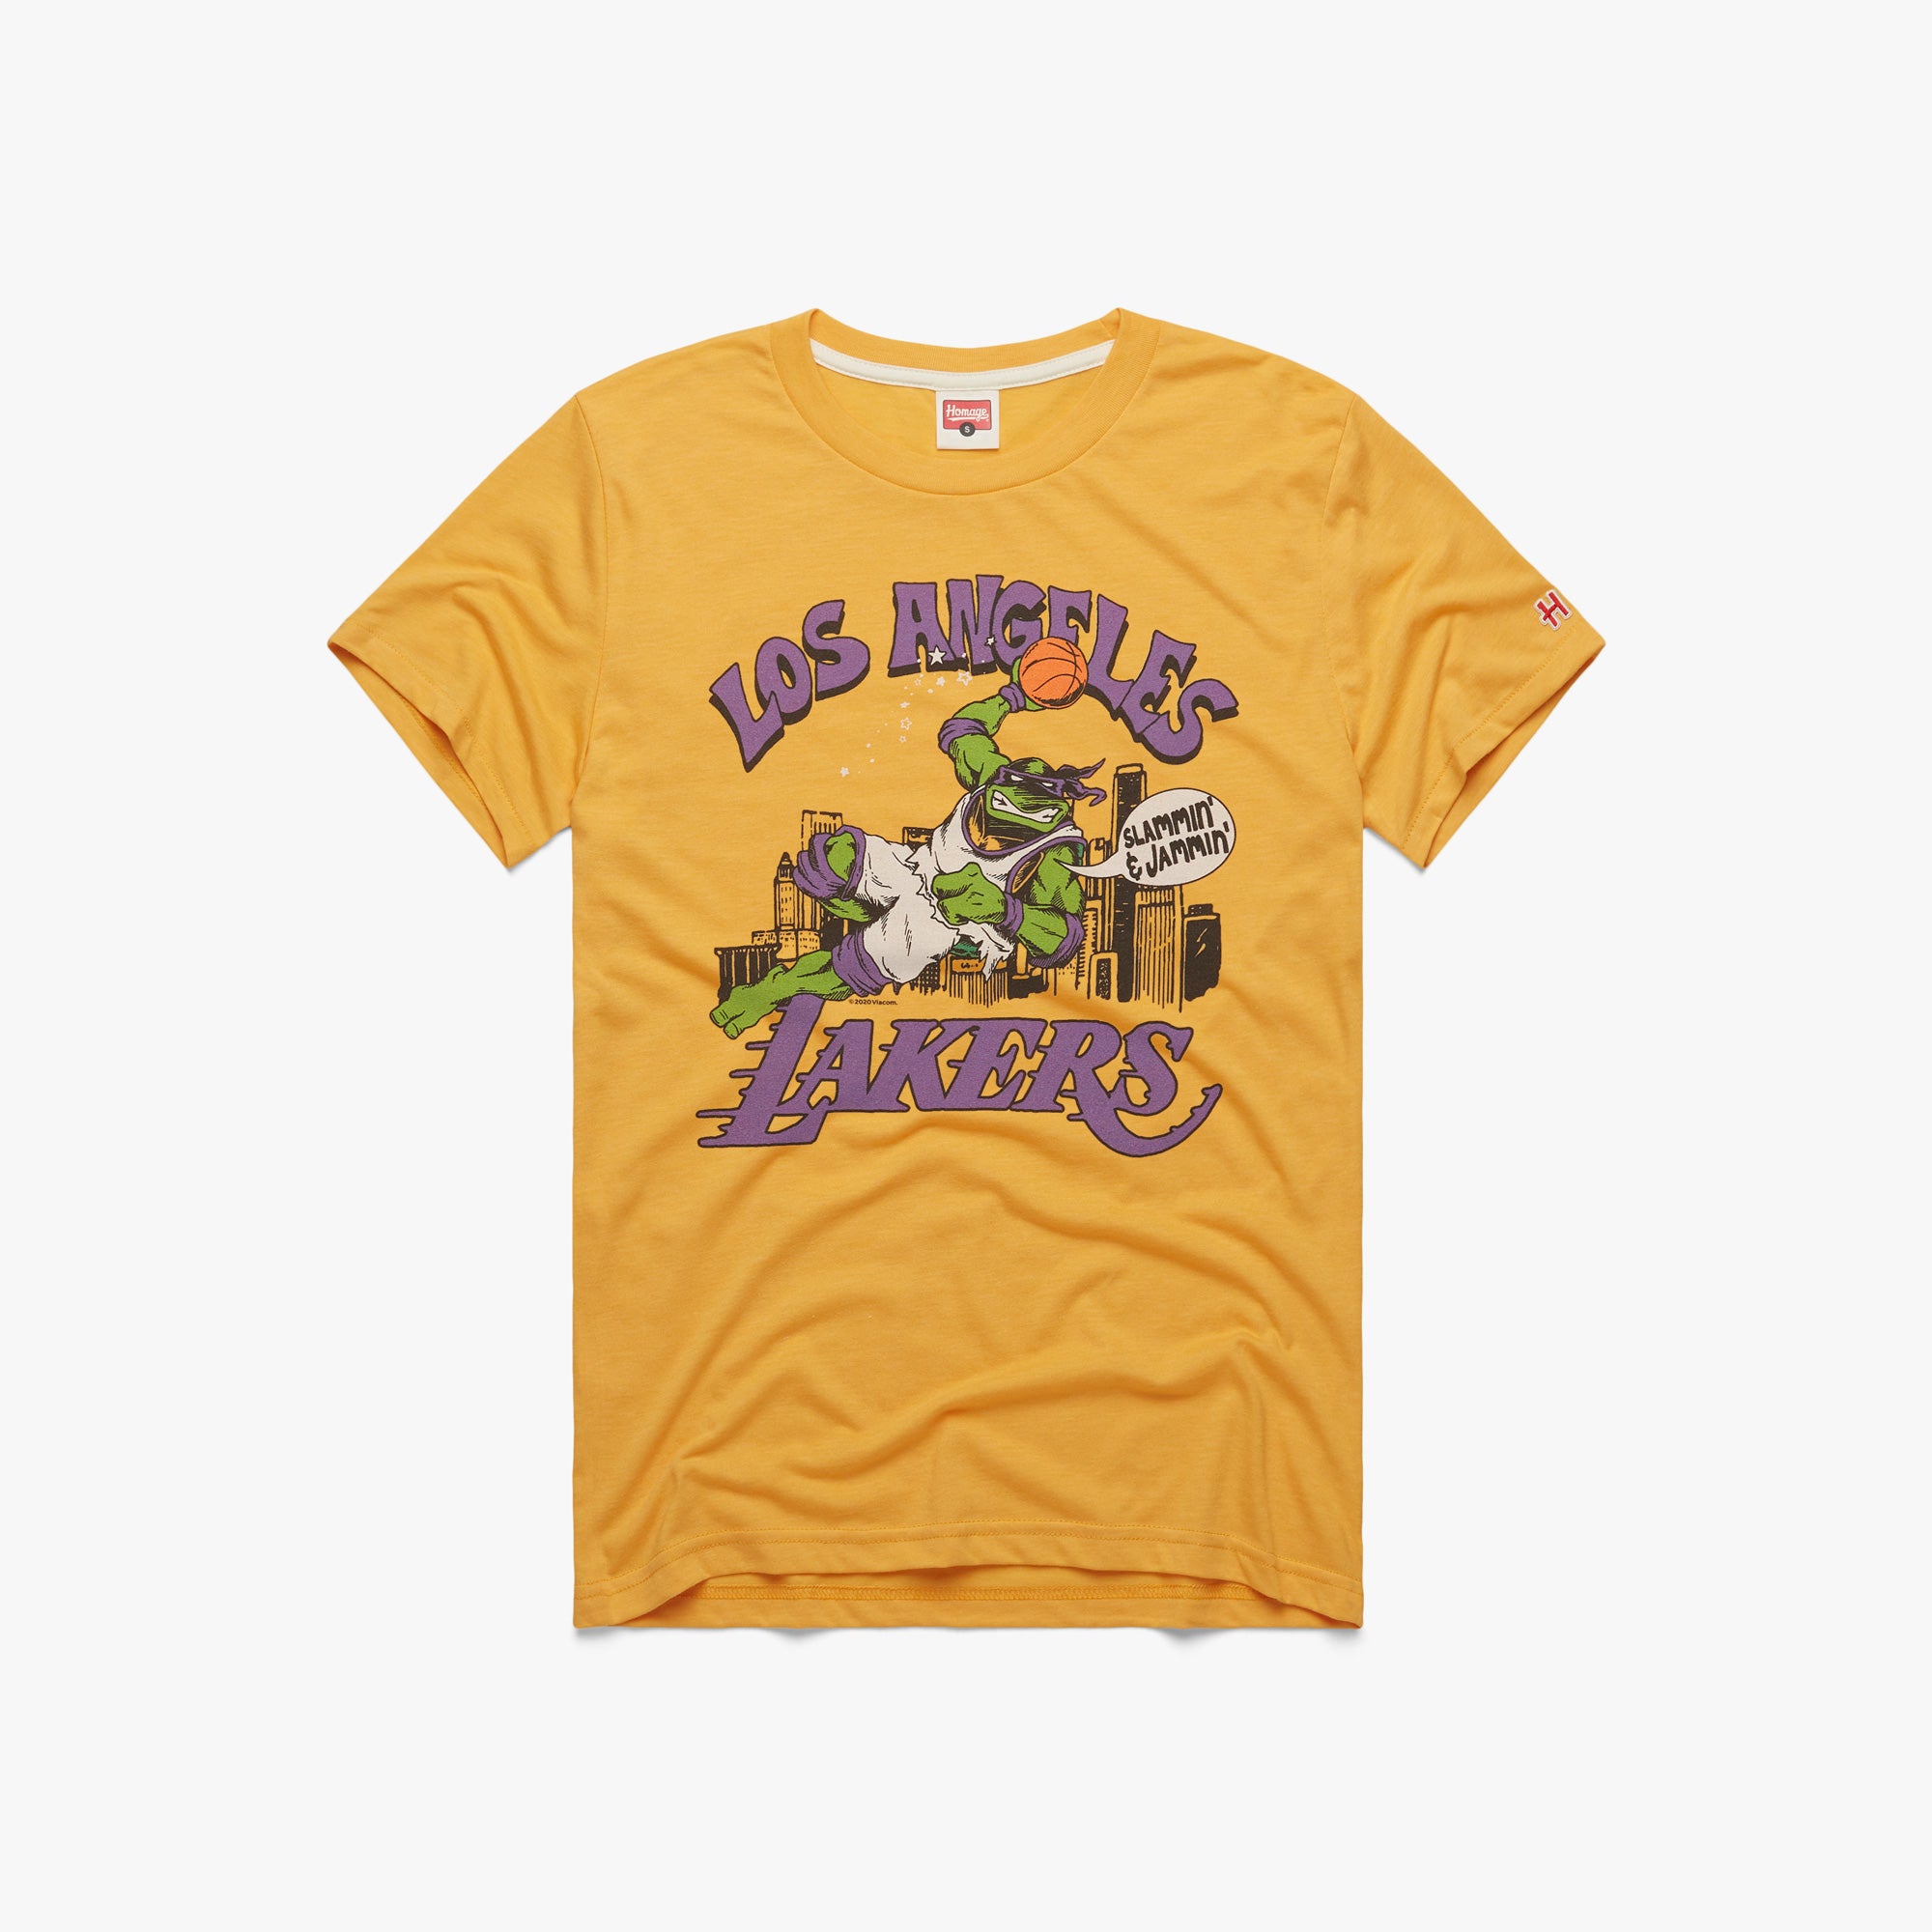 TMNT x La Lakers Slammin' and Jammin' T-Shirt from Homage | Yellow | Retro Nickelodeon T-Shirt from Homage.